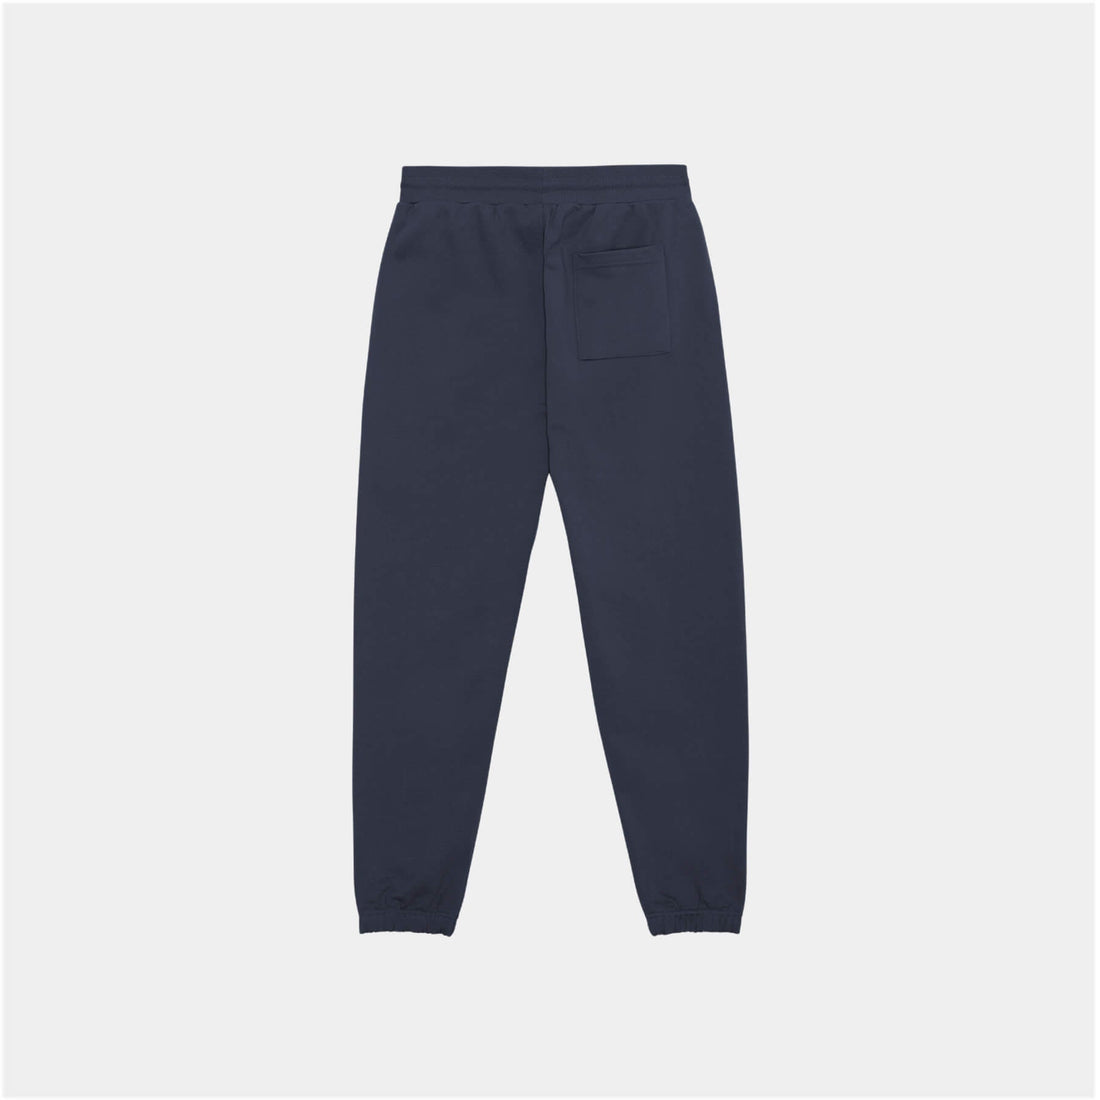 Sweatpants navy blue